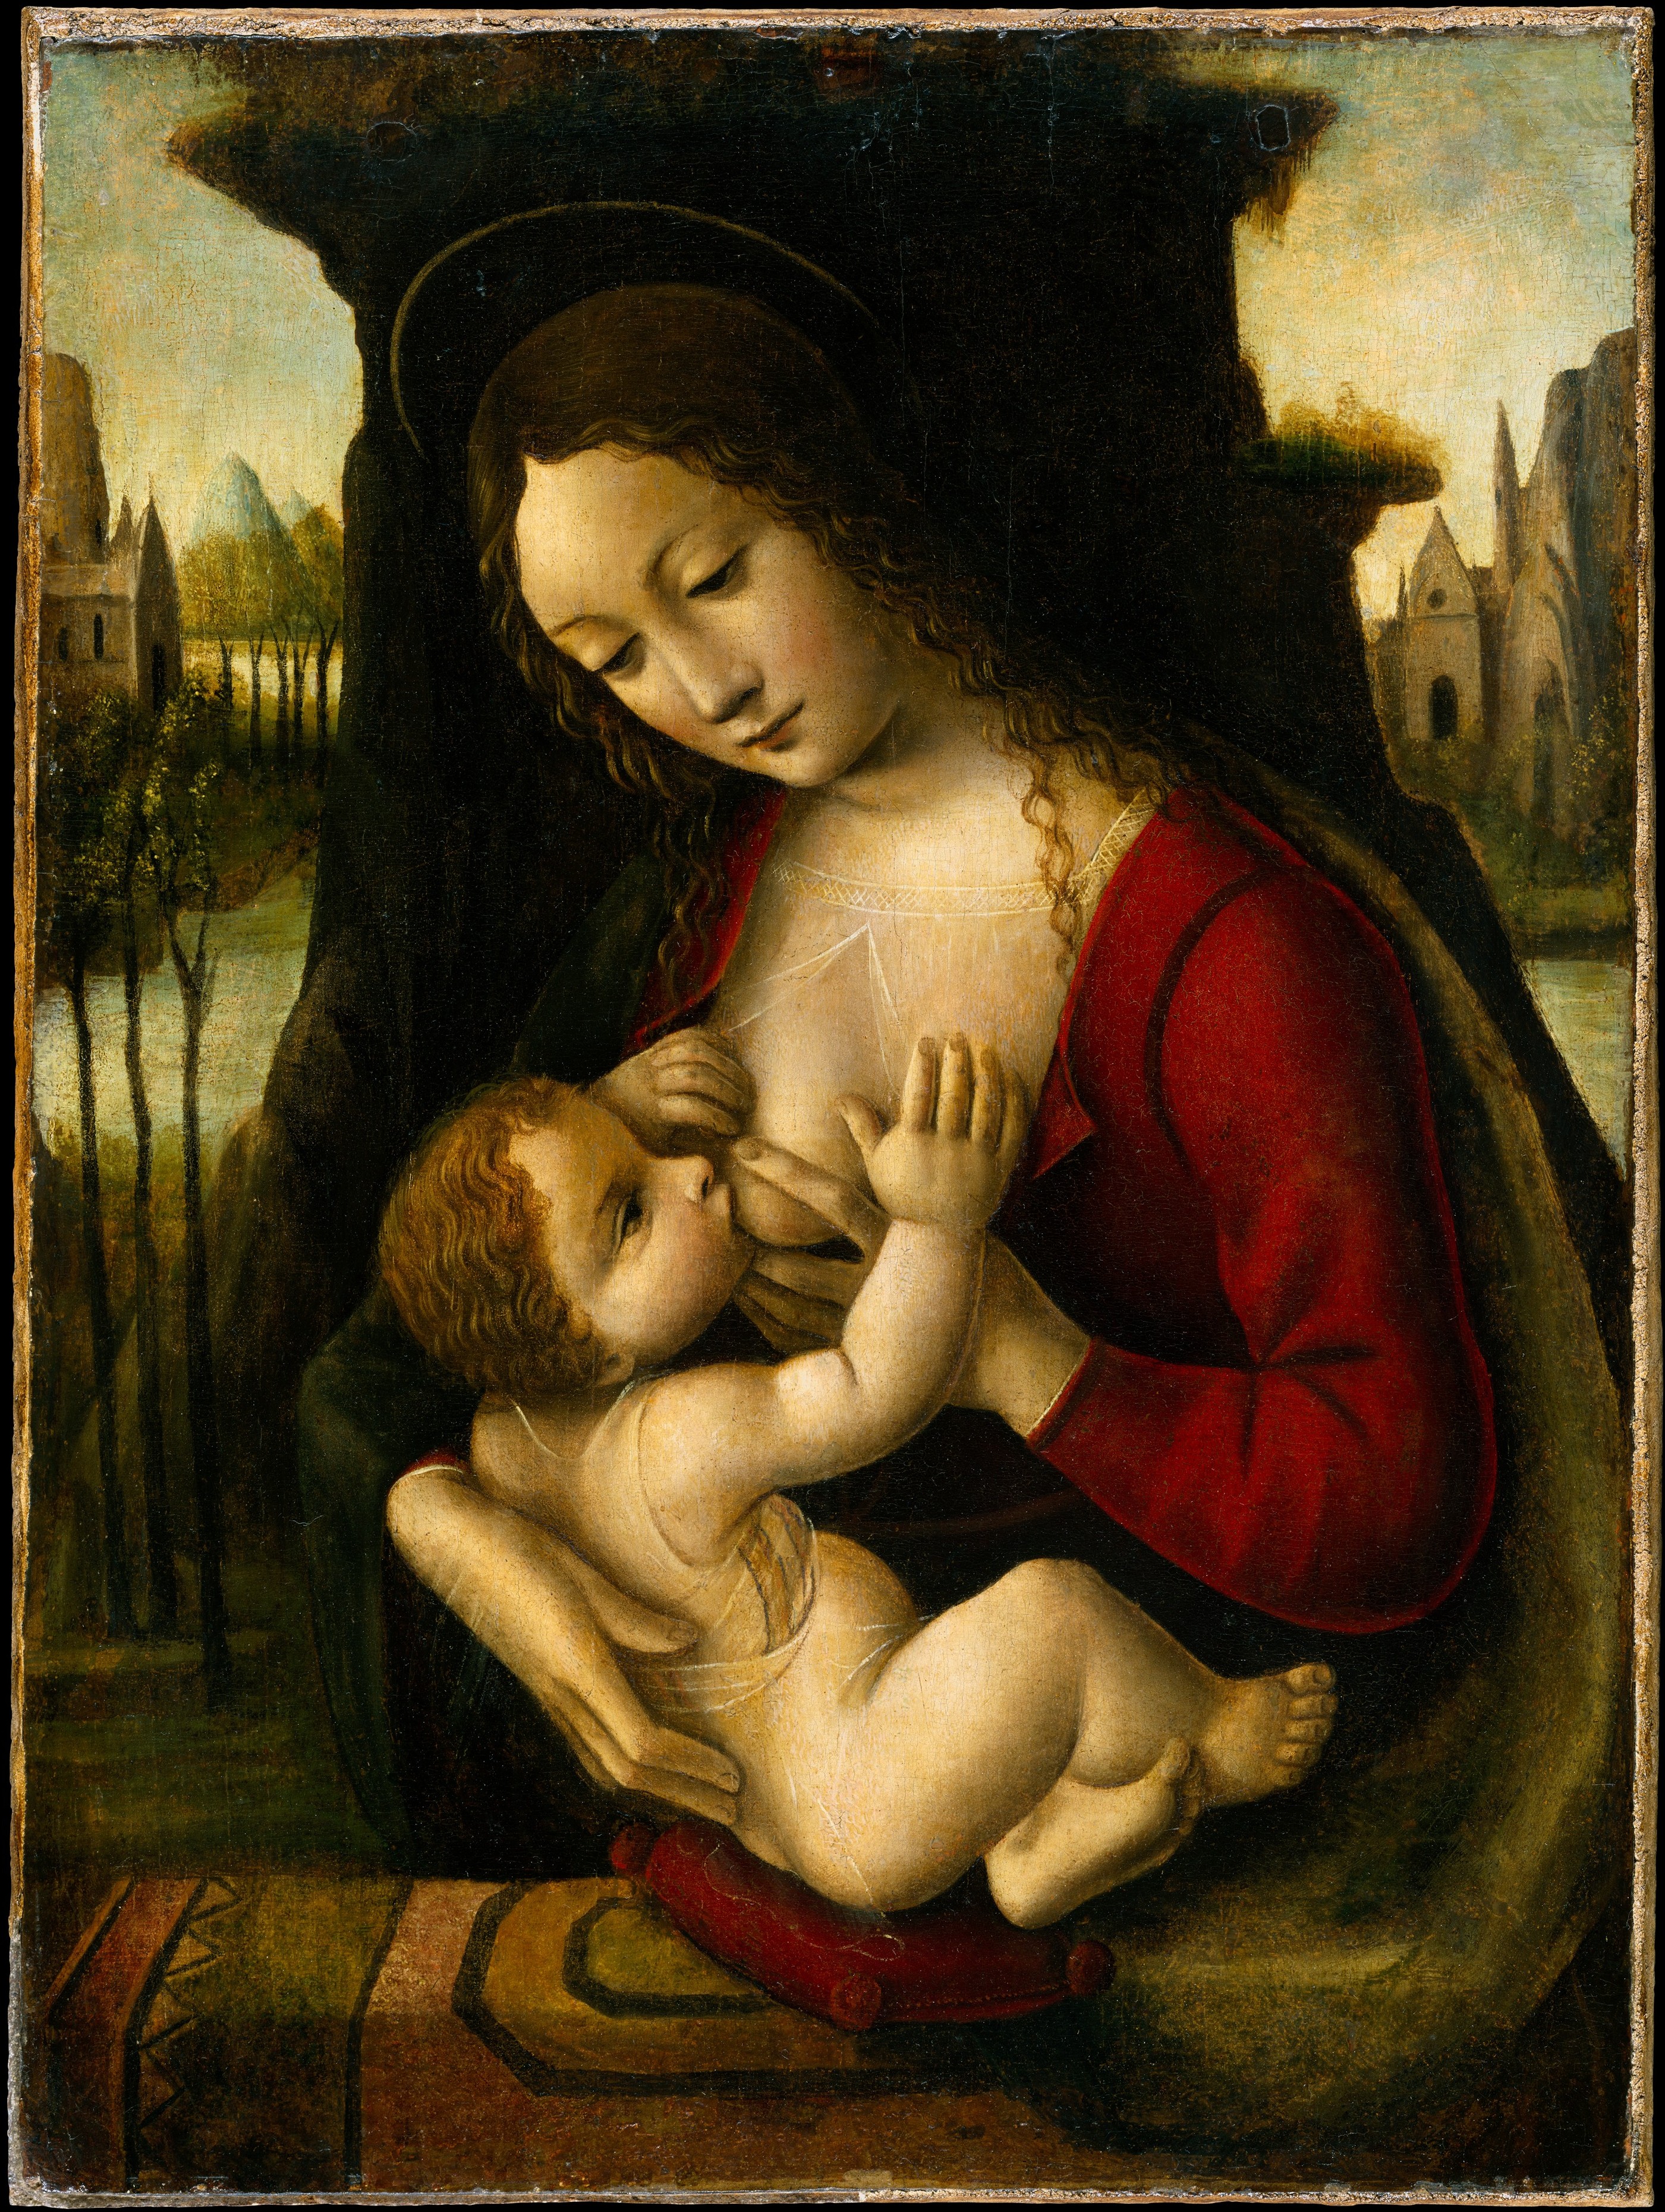 Автор картины мадонна с младенцем. Бернардино Луини Мадонна с младенцем. Мадонна с младенцем Леонардо да Винчи. Мадонна с младенцем (Мадонна Литта). Картина Бернардино Мадонна.